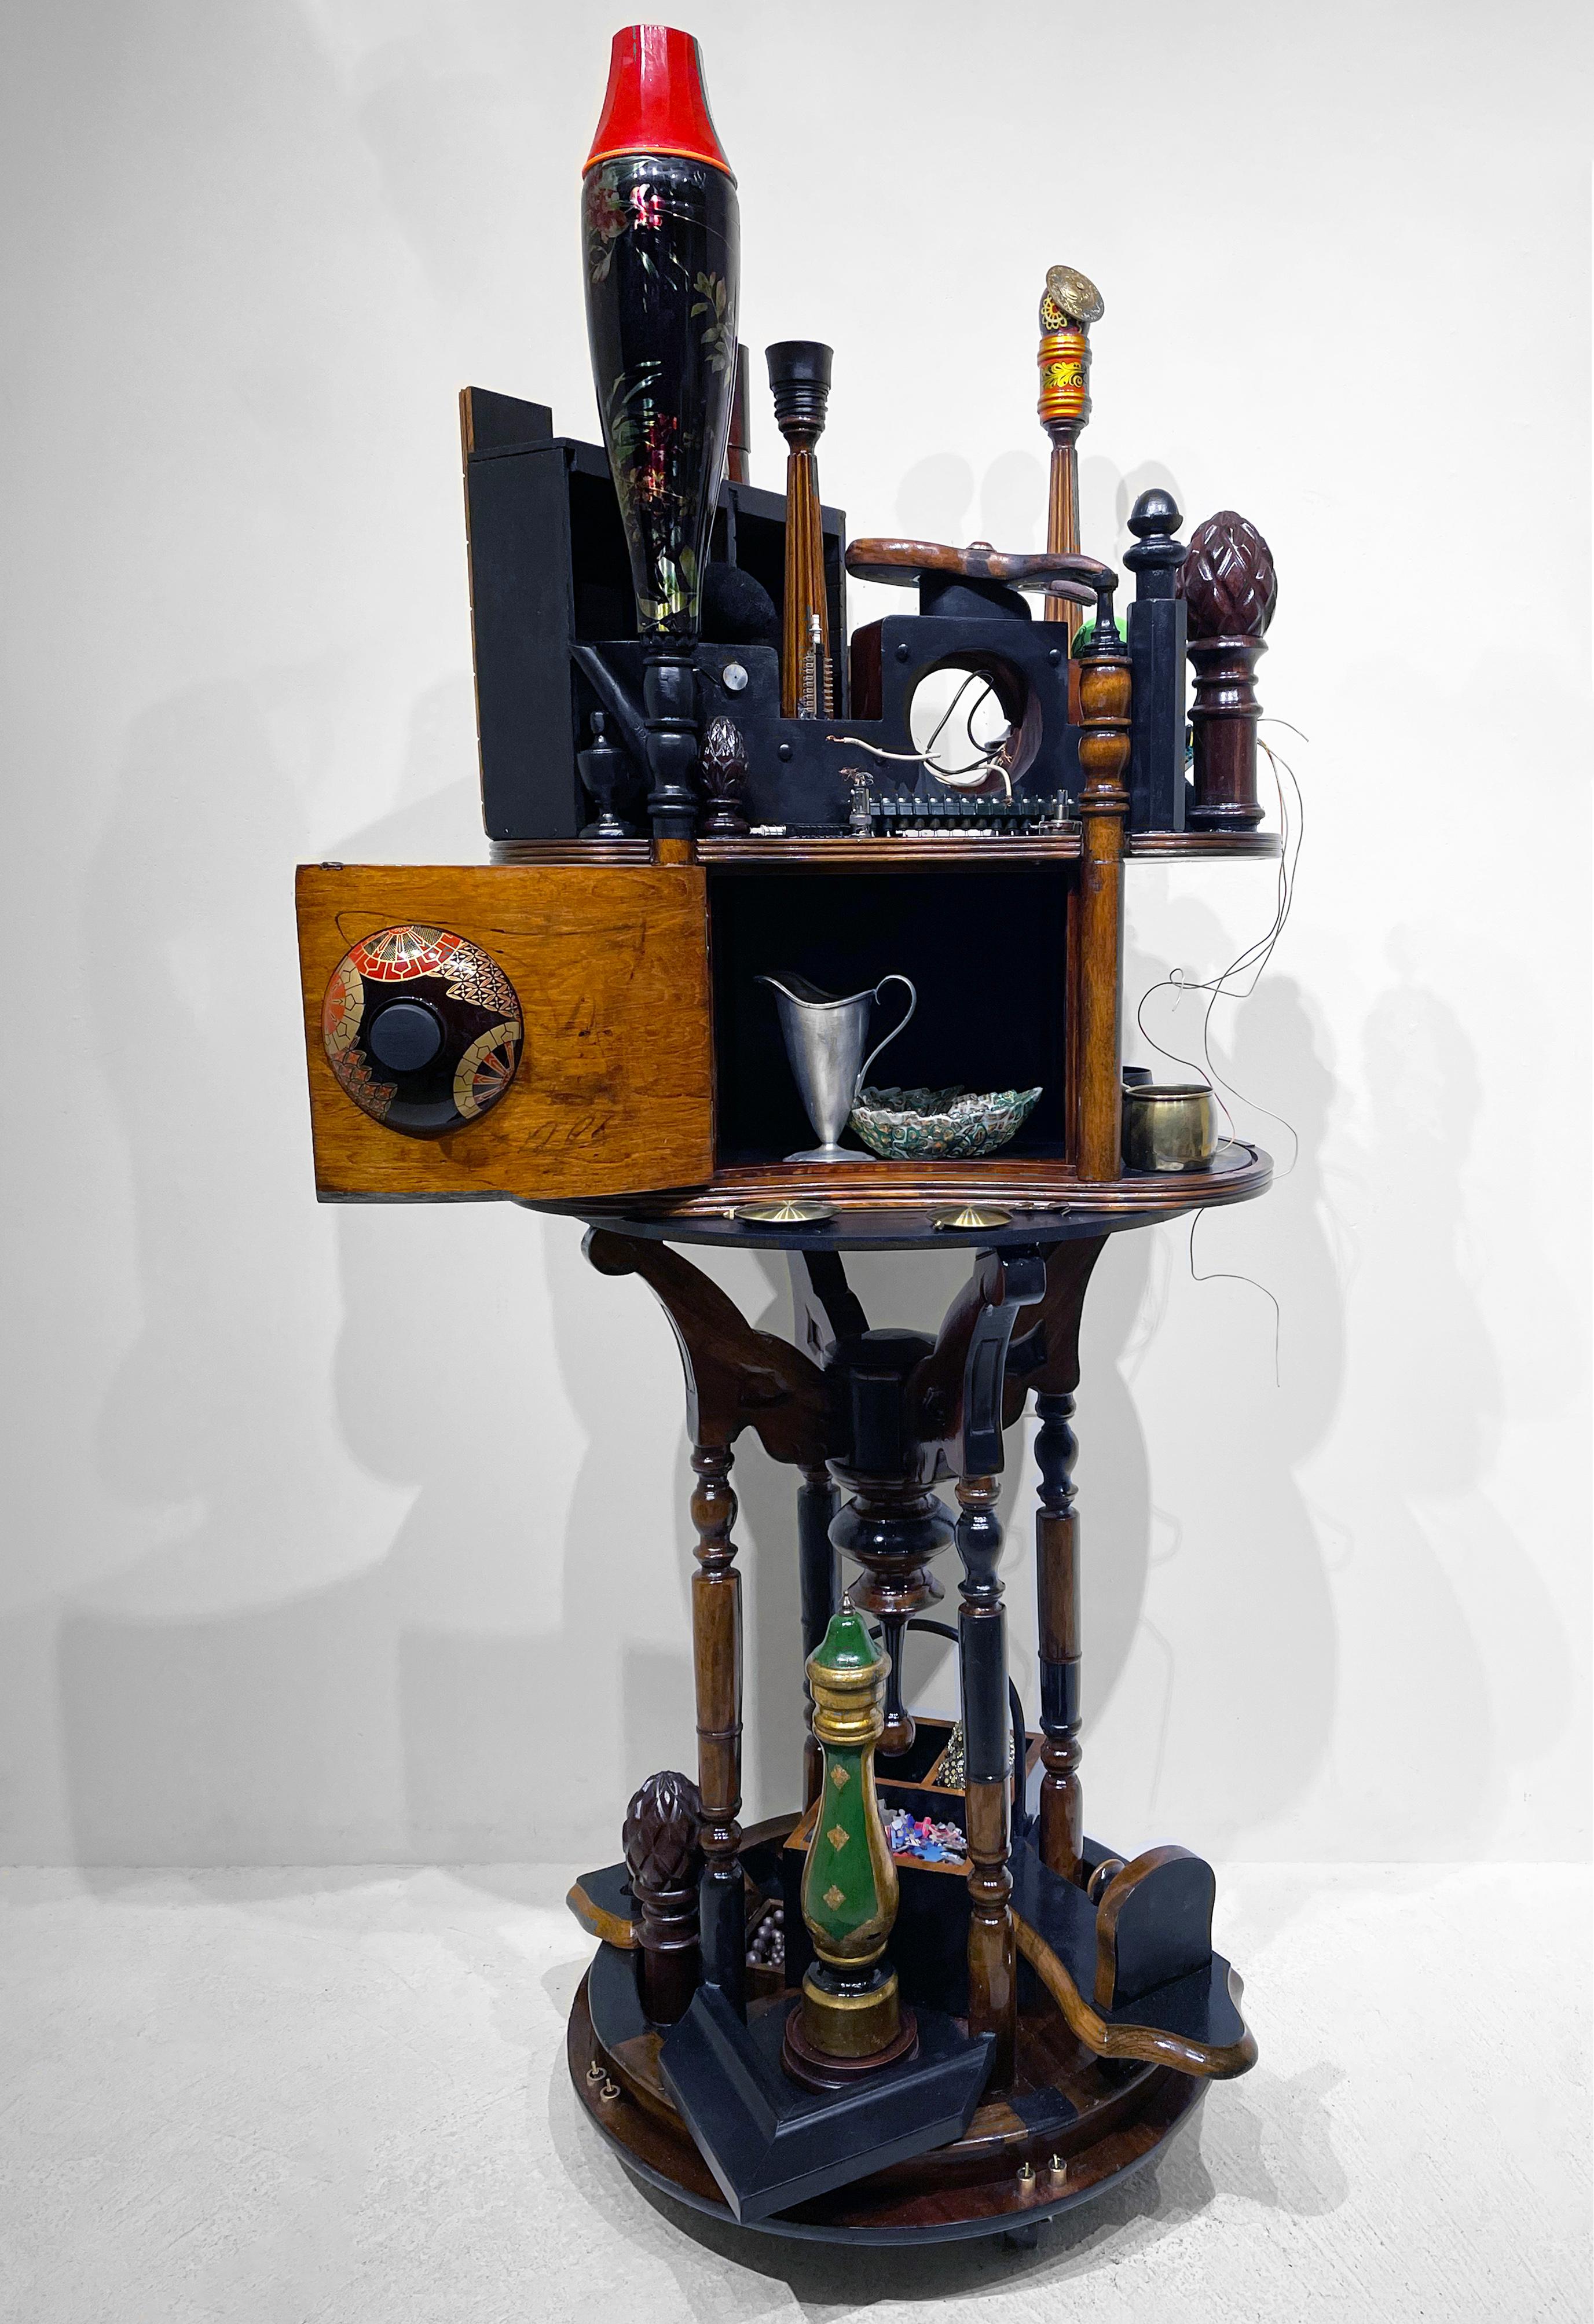 Linda Stein, Favorites 1232 - Contemporary Art Mixed Media Assemblage Sculpture